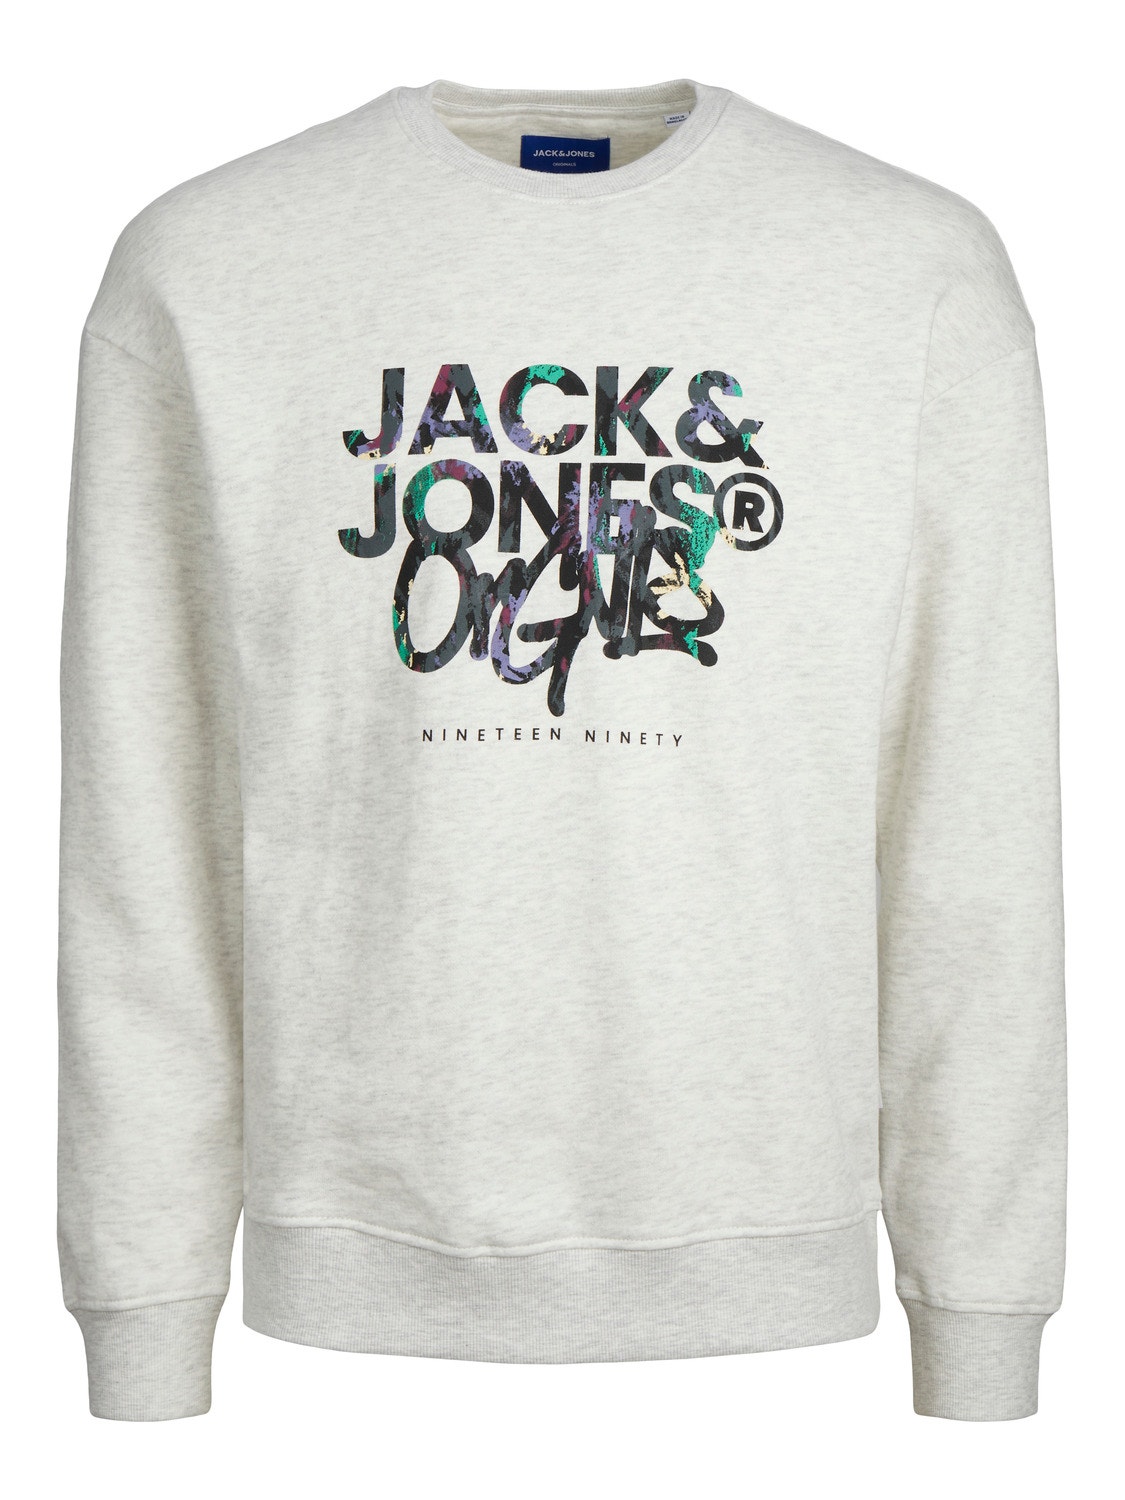 Jack & Jones Printed Crewn Neck Sweatshirt -White Melange - 12242366